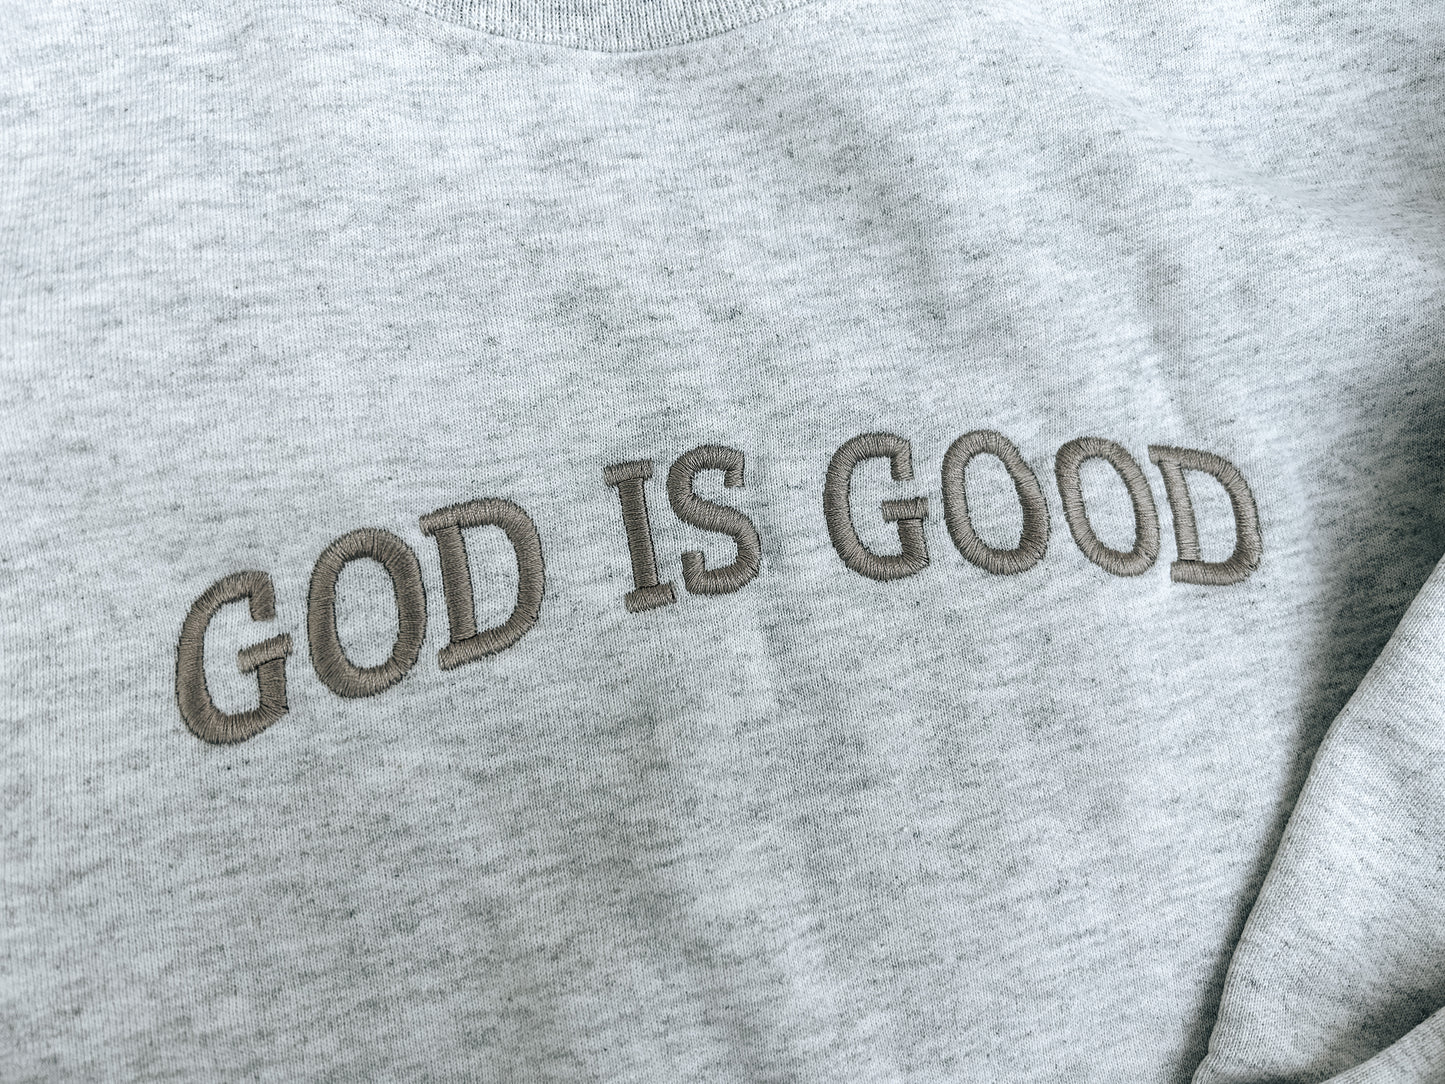 God is Good Embroidered Crewneck Sweatshirt